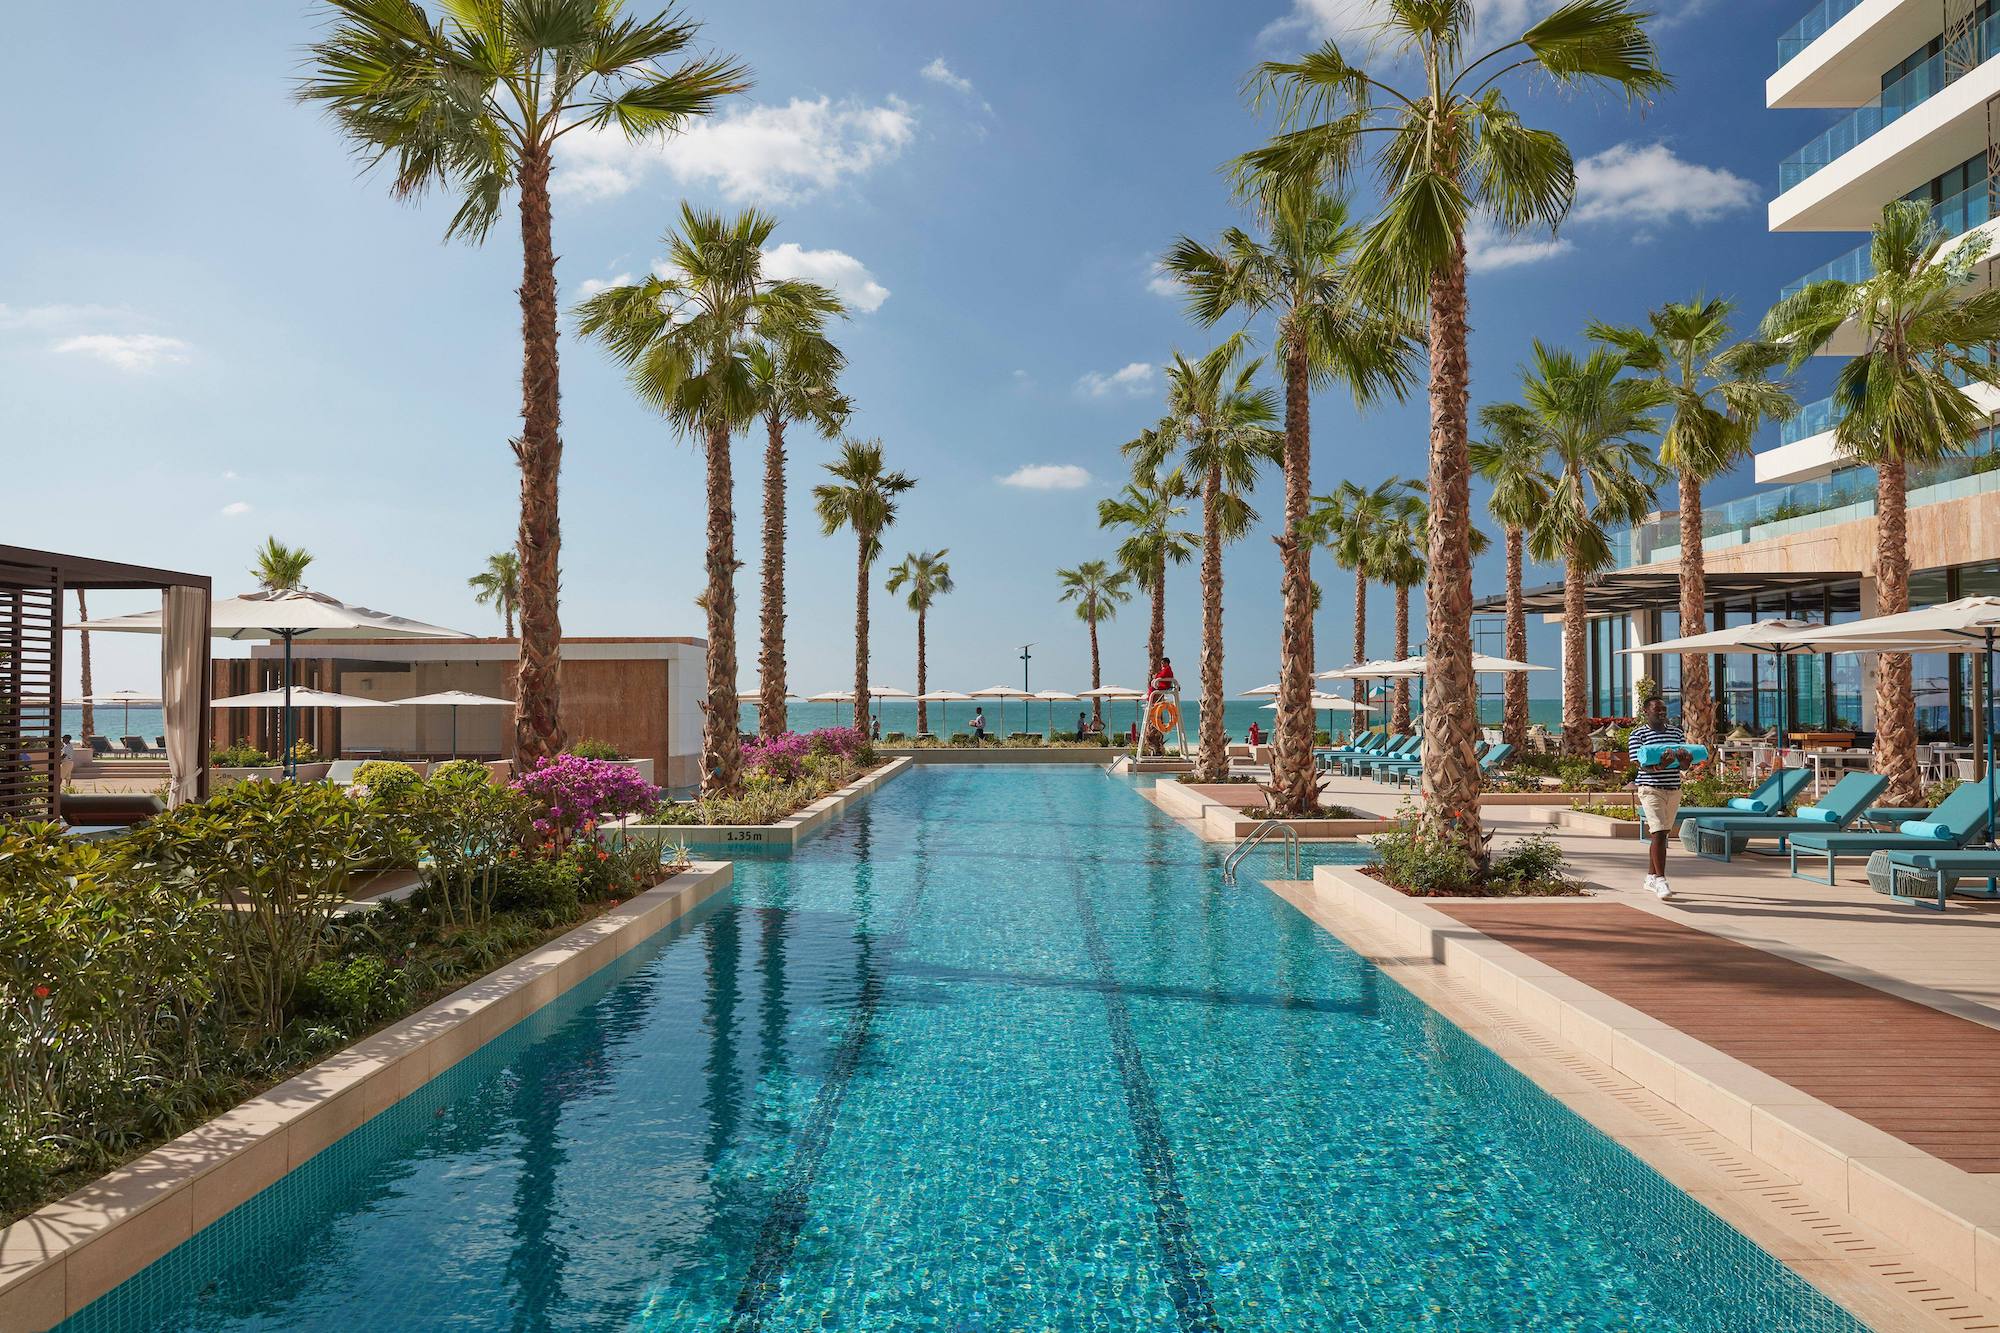 Mandarin Oriental Jumeira, Dubai hotel pool